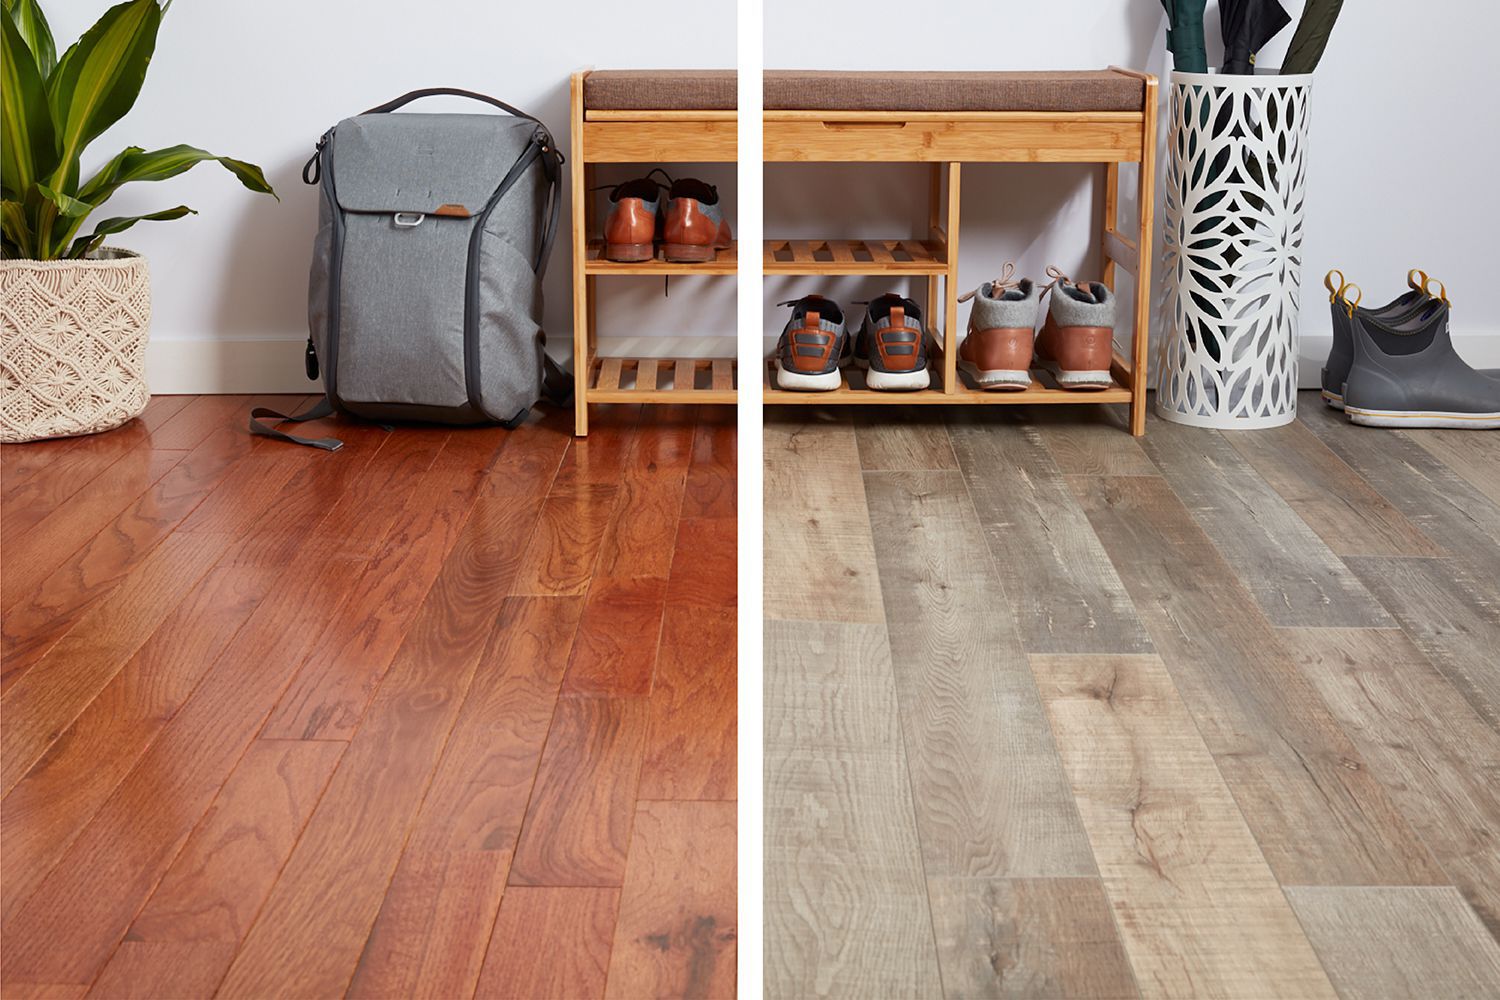 The Preferred Choice: Wood Effect Tiles vs. Laminate Flooring